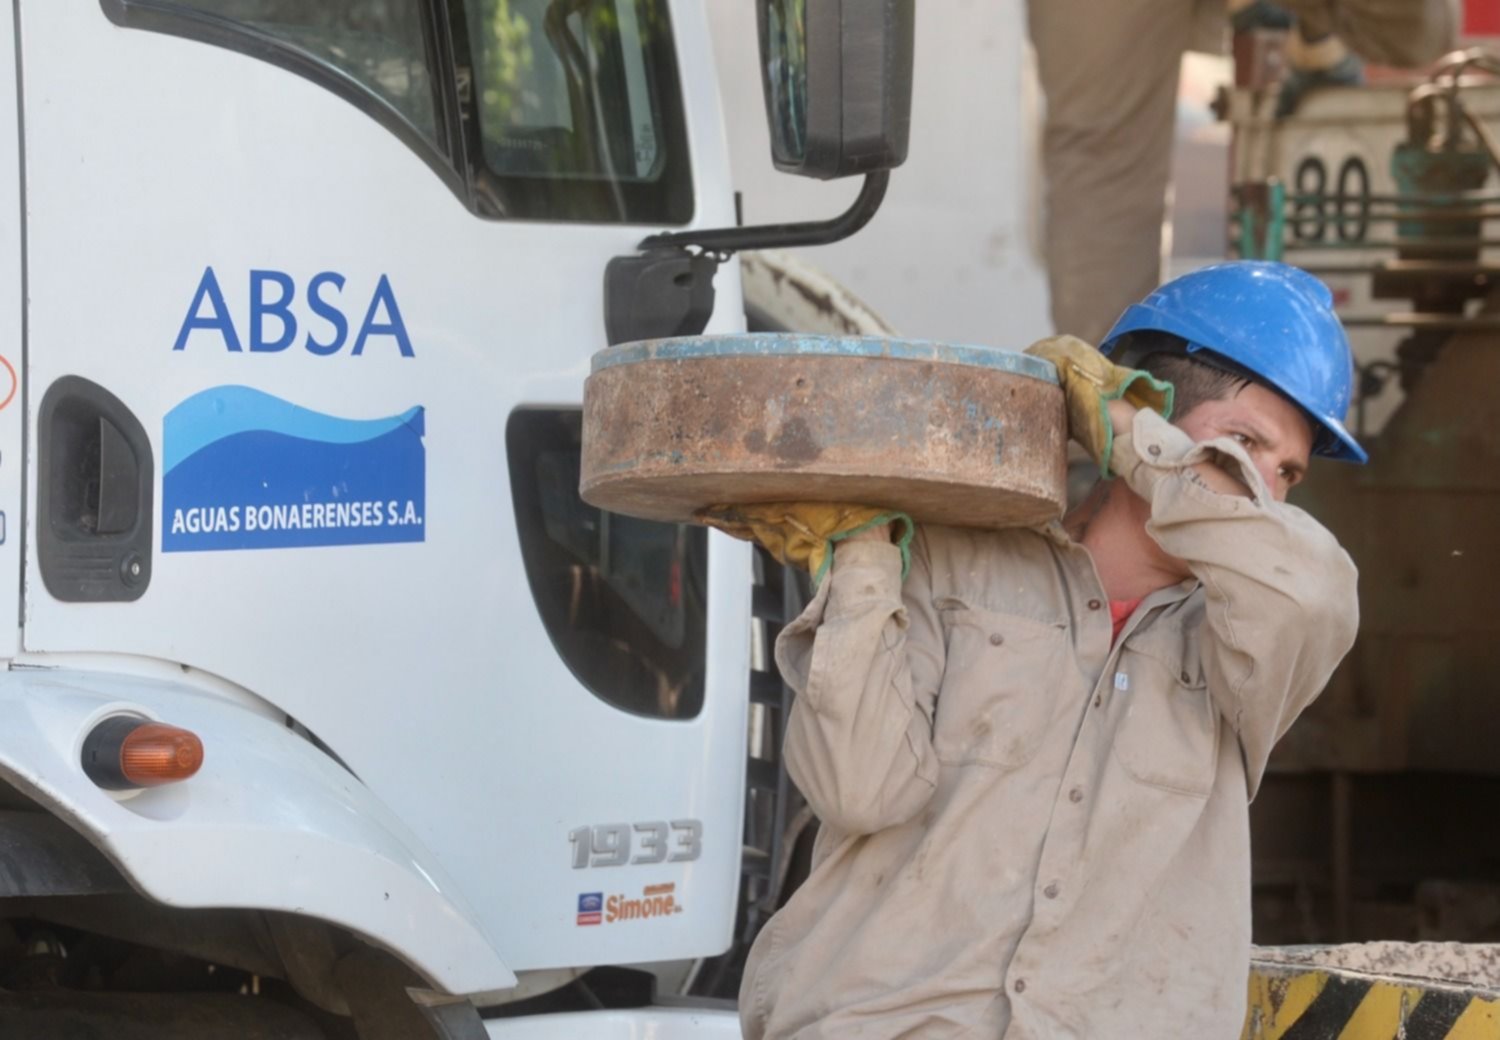 Faltará agua en dos barrios de La Plata por tareas de mantenimiento de ABSA